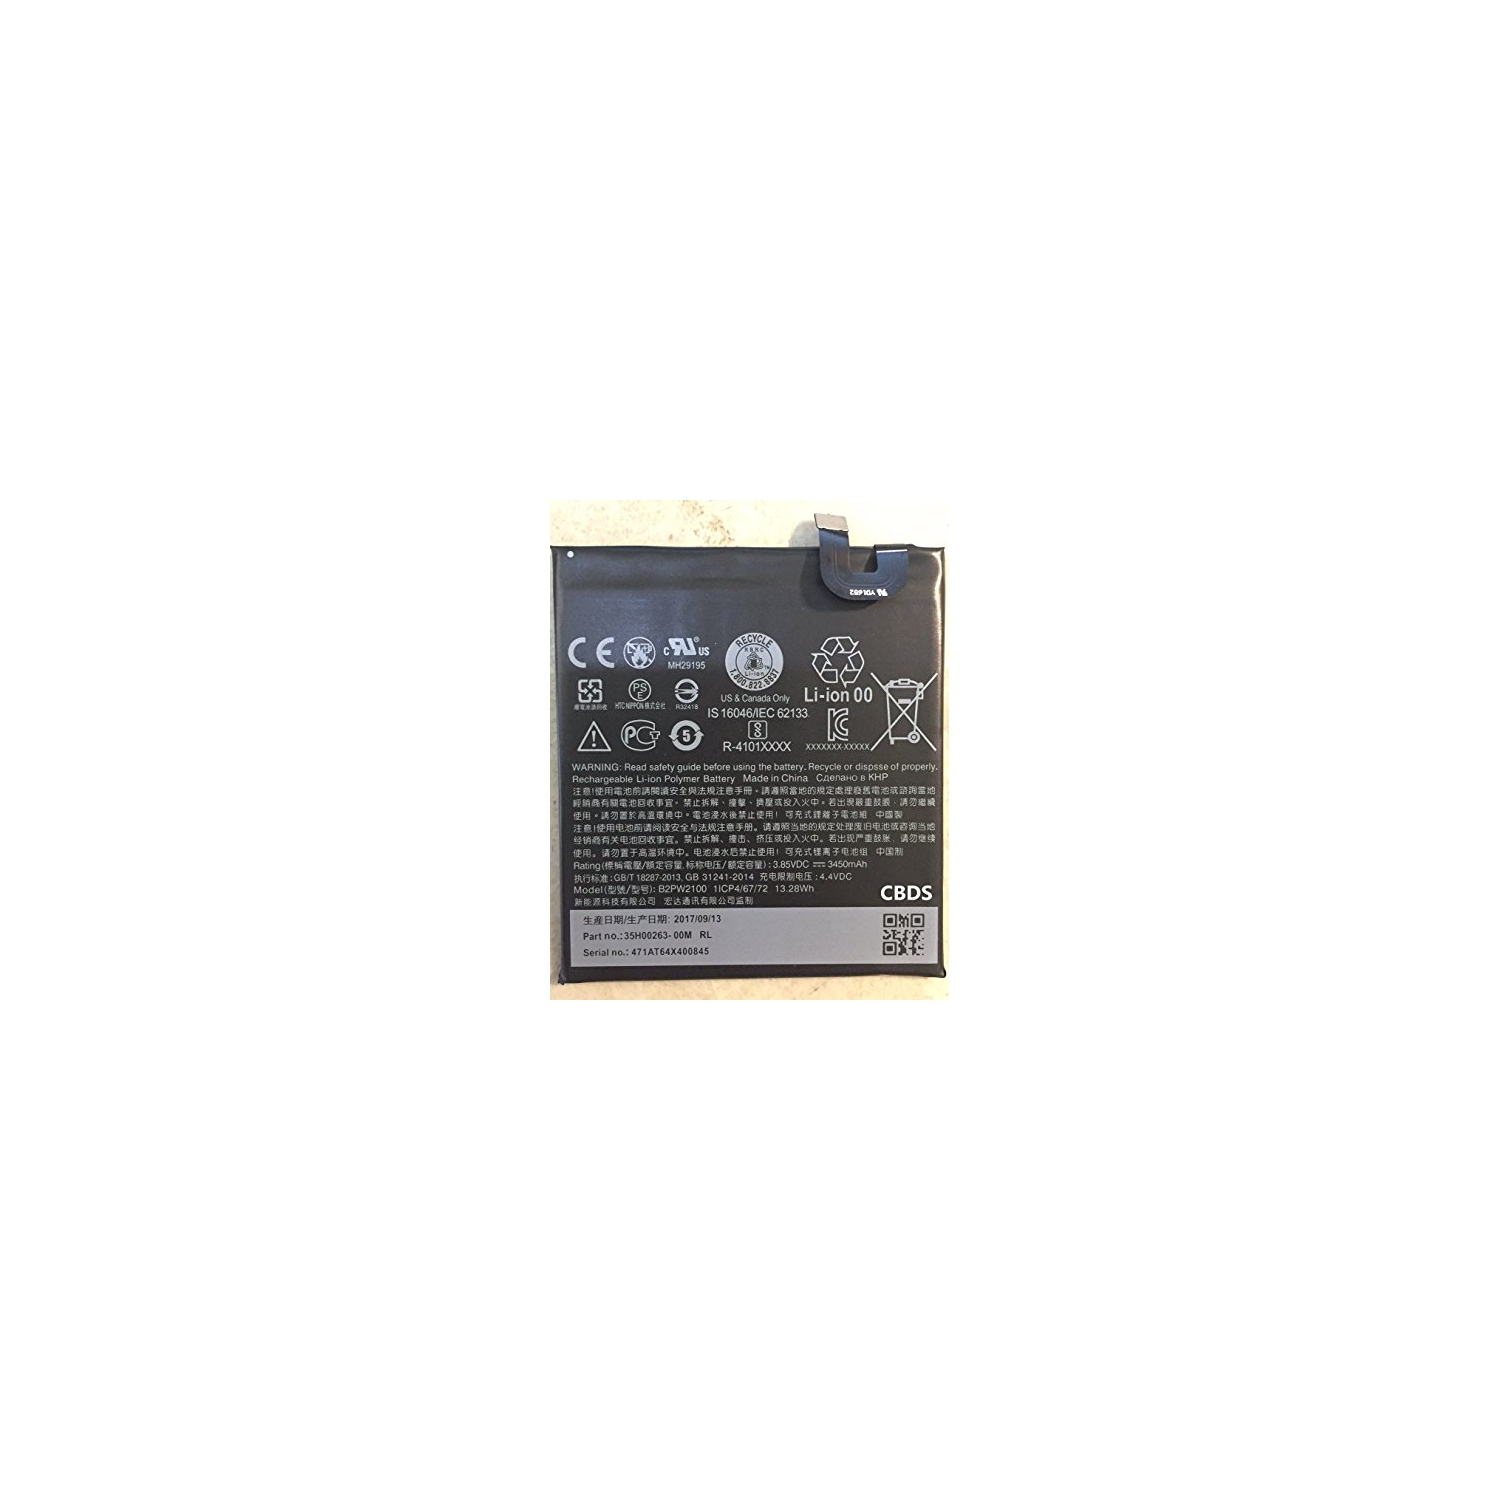 (CBDS) 3450mAh, 13.28 Wh Replacement Battery - Compatible with Google Pixel XL 5.5" 2016 1st Gen HTC Nexus M1 B2PW2100